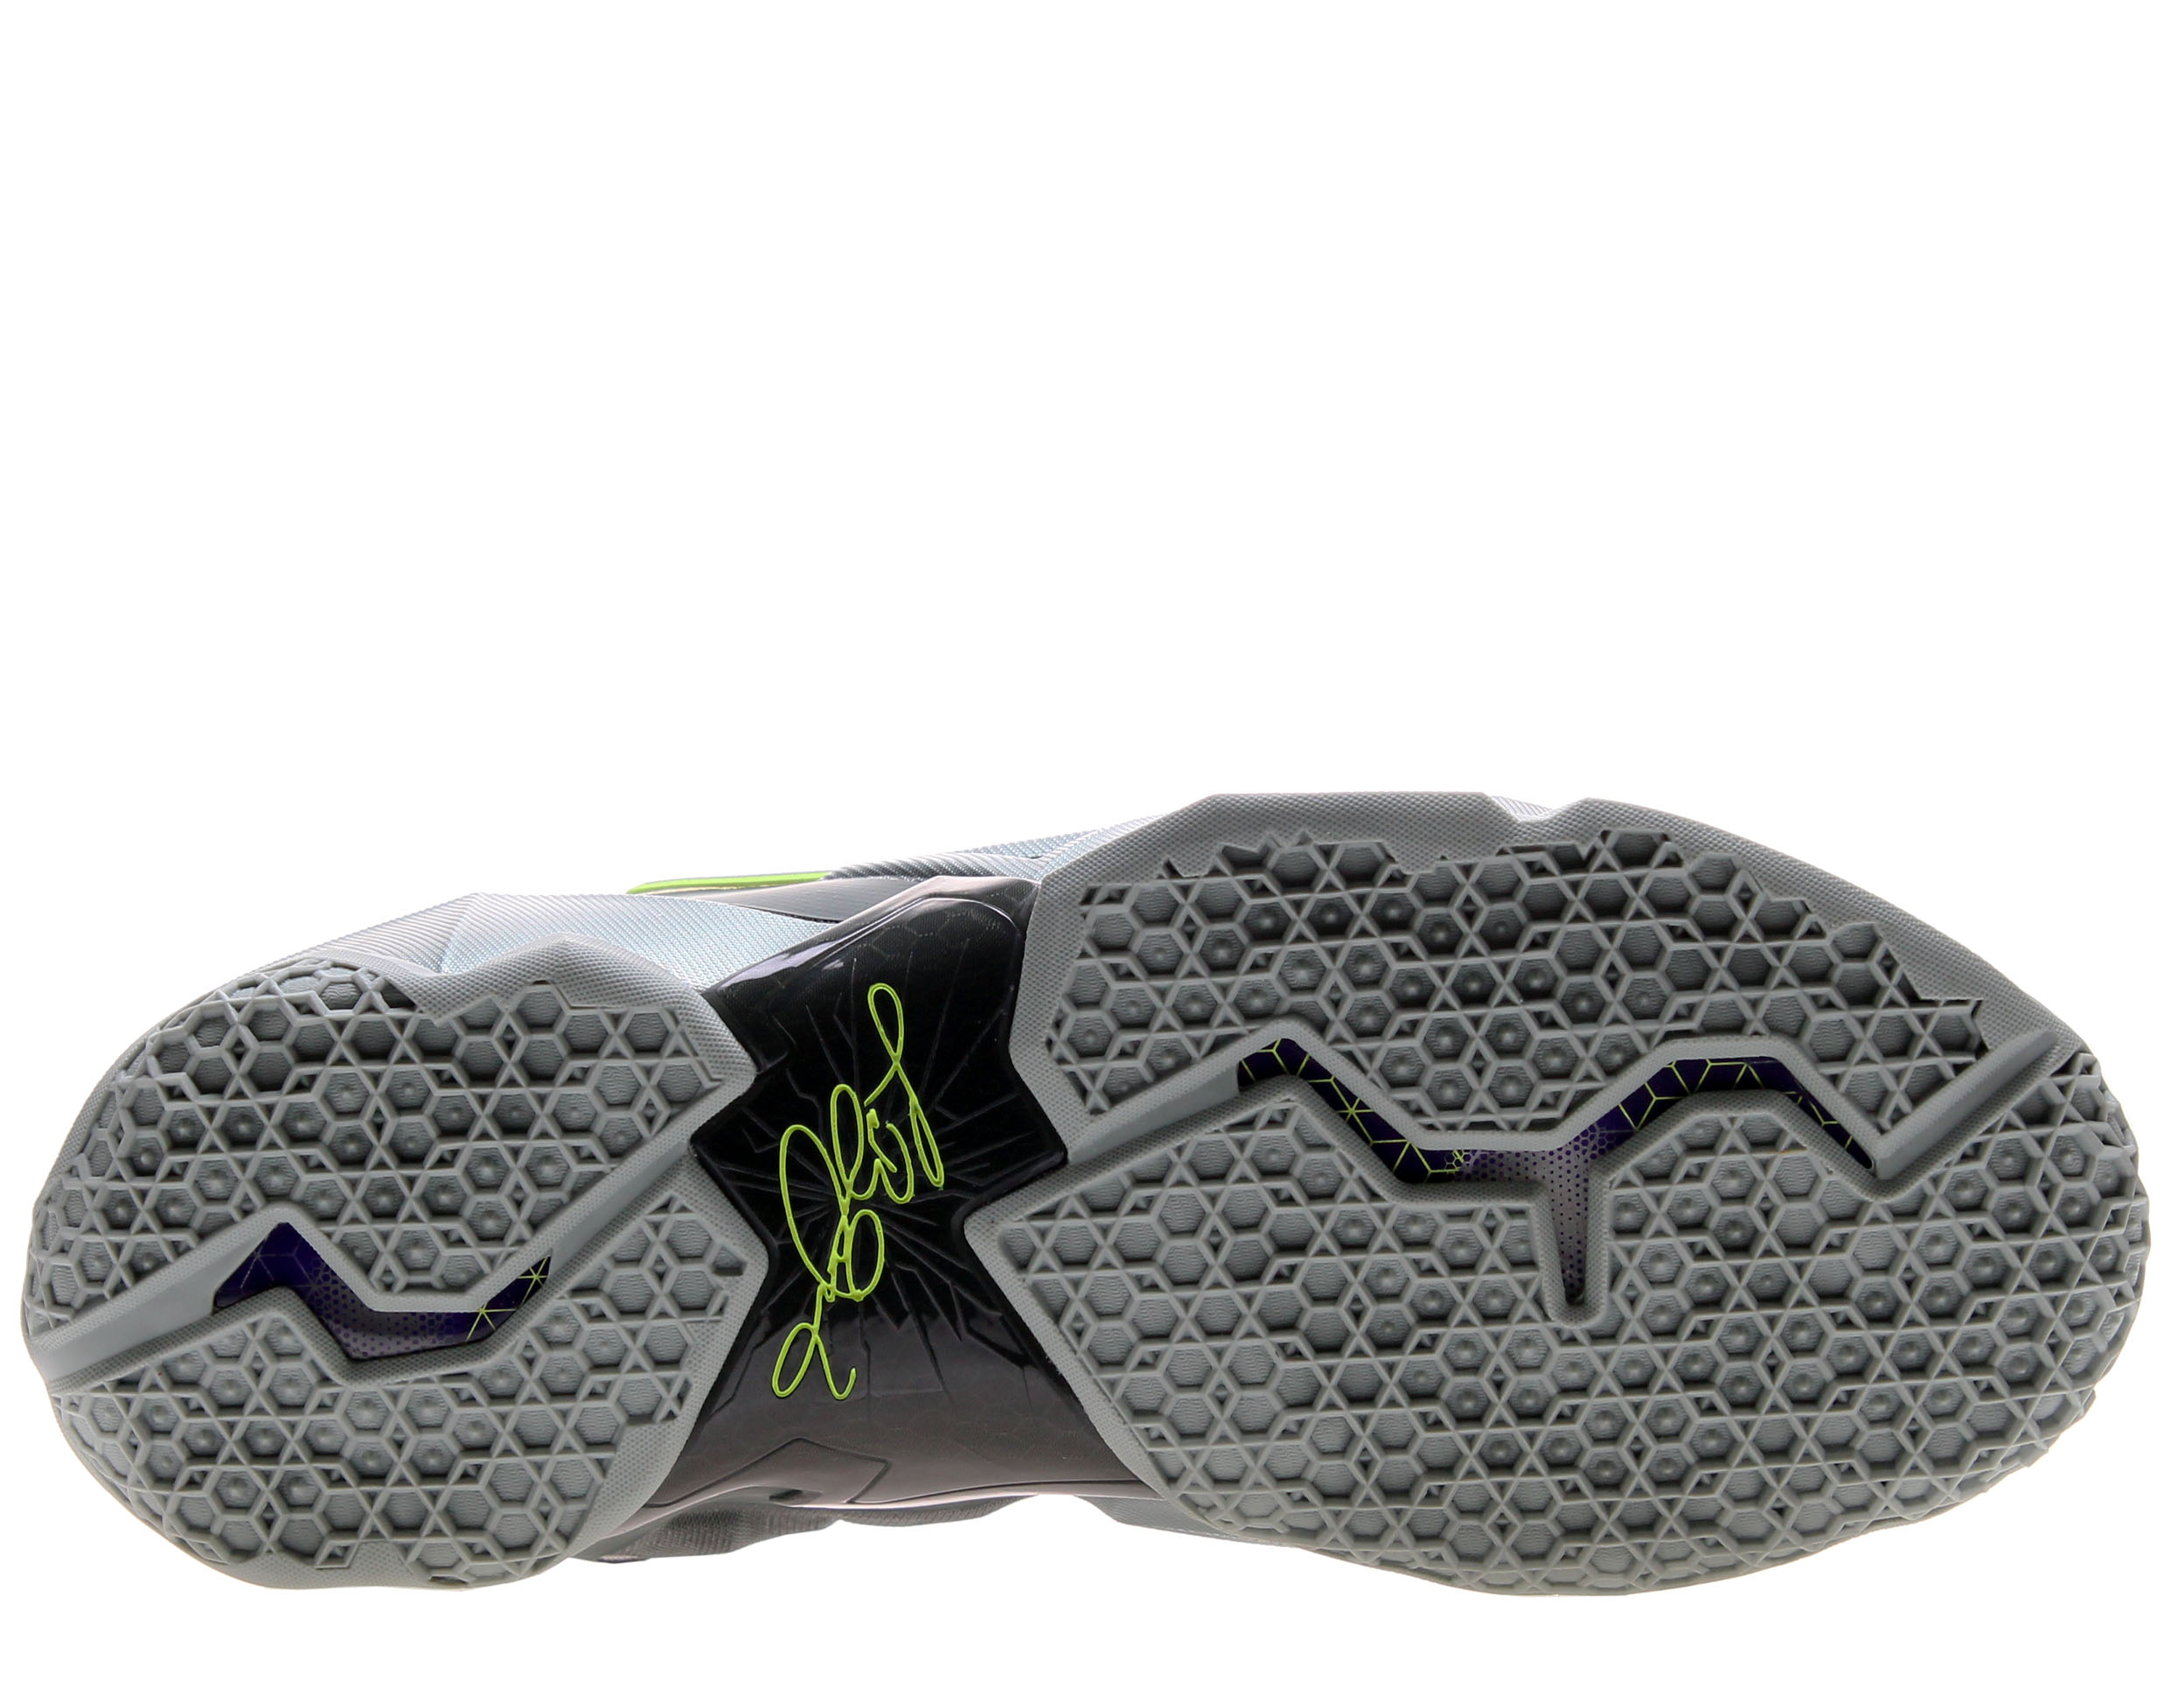 Nike Lebron XI Men's Basketball Shoes MC Green/Spray-Dark MC Green/Volt 616175-300 (12 D(M) US) - image 5 of 6